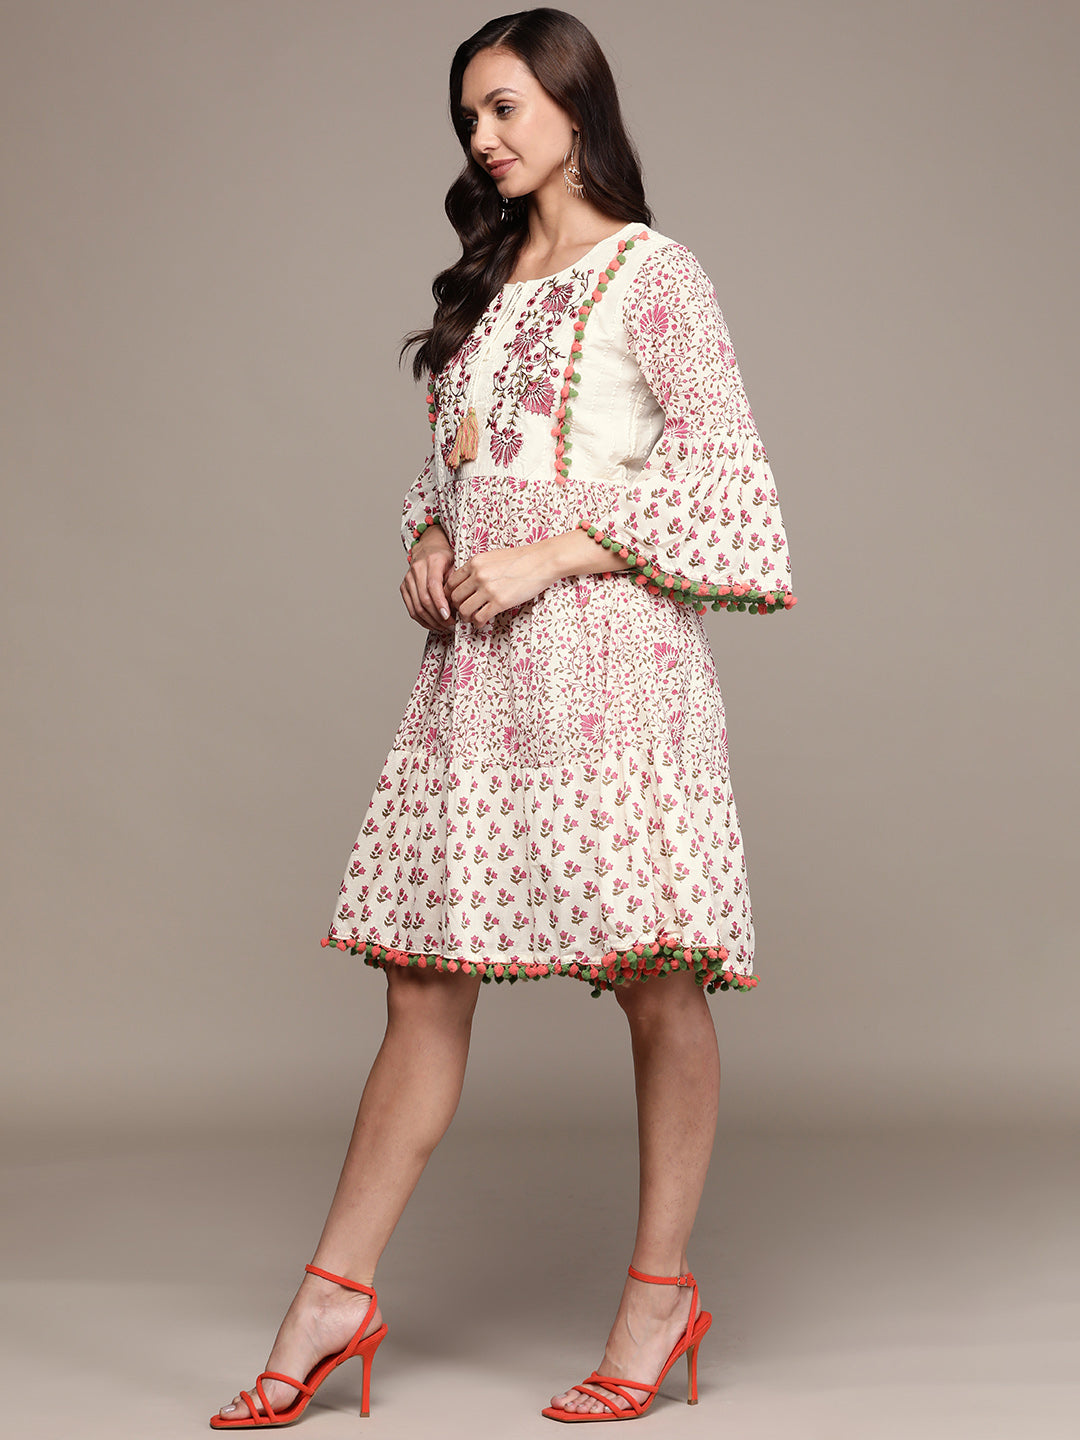 Ishin Women's Cream Embroidered A-Line Dress